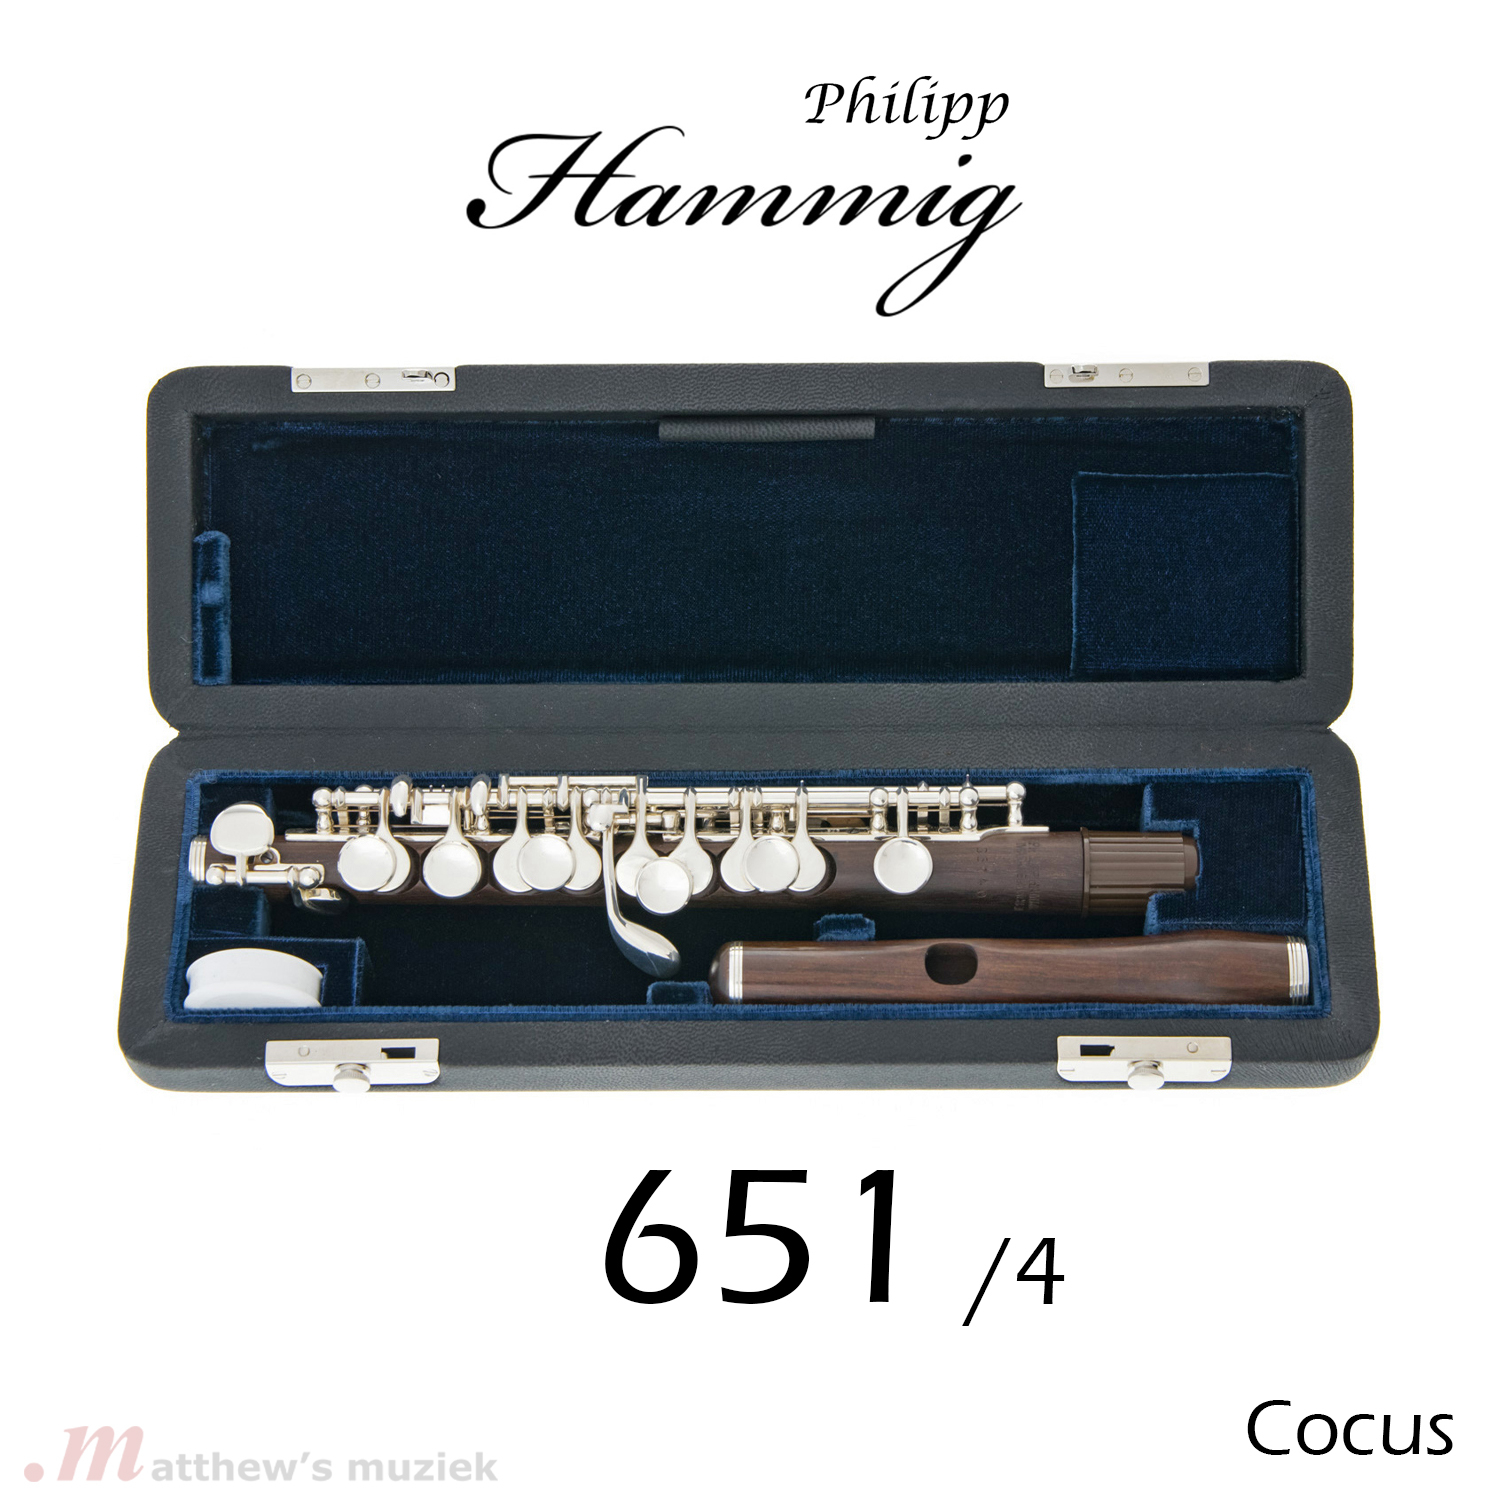 Philipp Hammig Piccolo - 651/4 Cocus